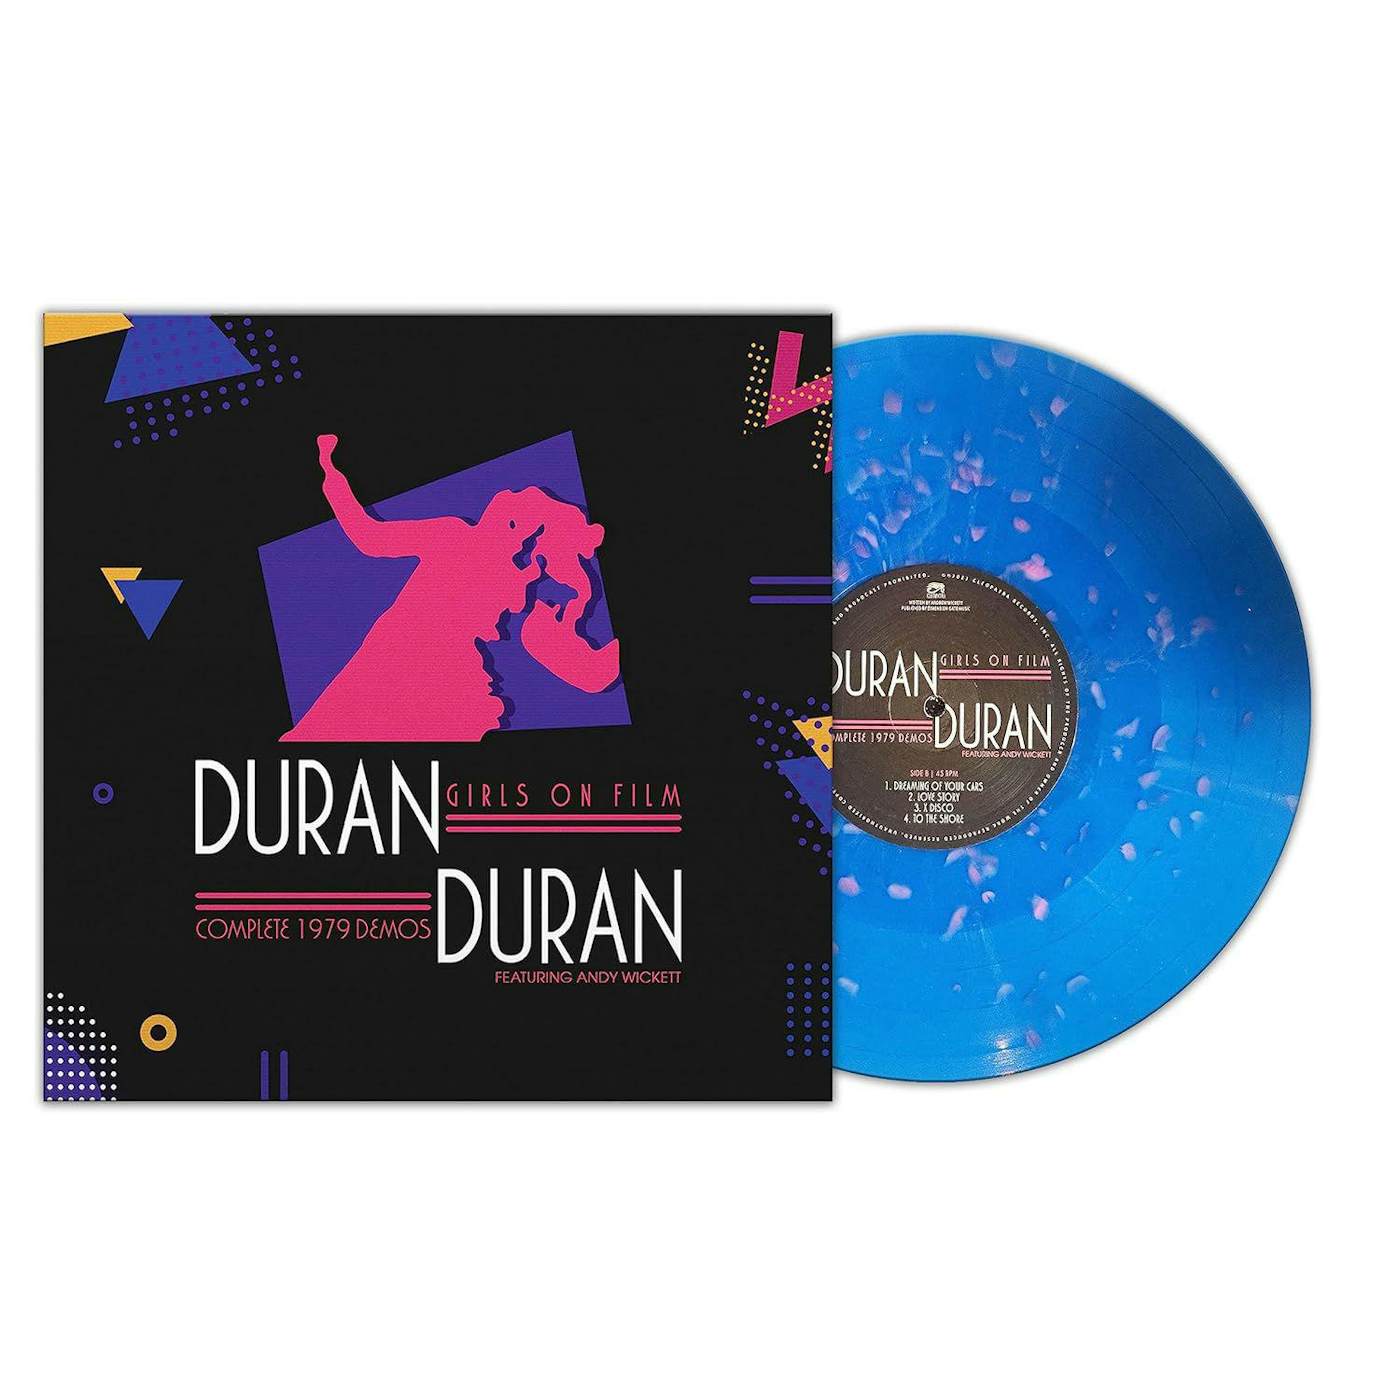 Duran Duran Girls On Film - Complete 1979 Demos (Blue W/ Pink Dots) Vinyl Record